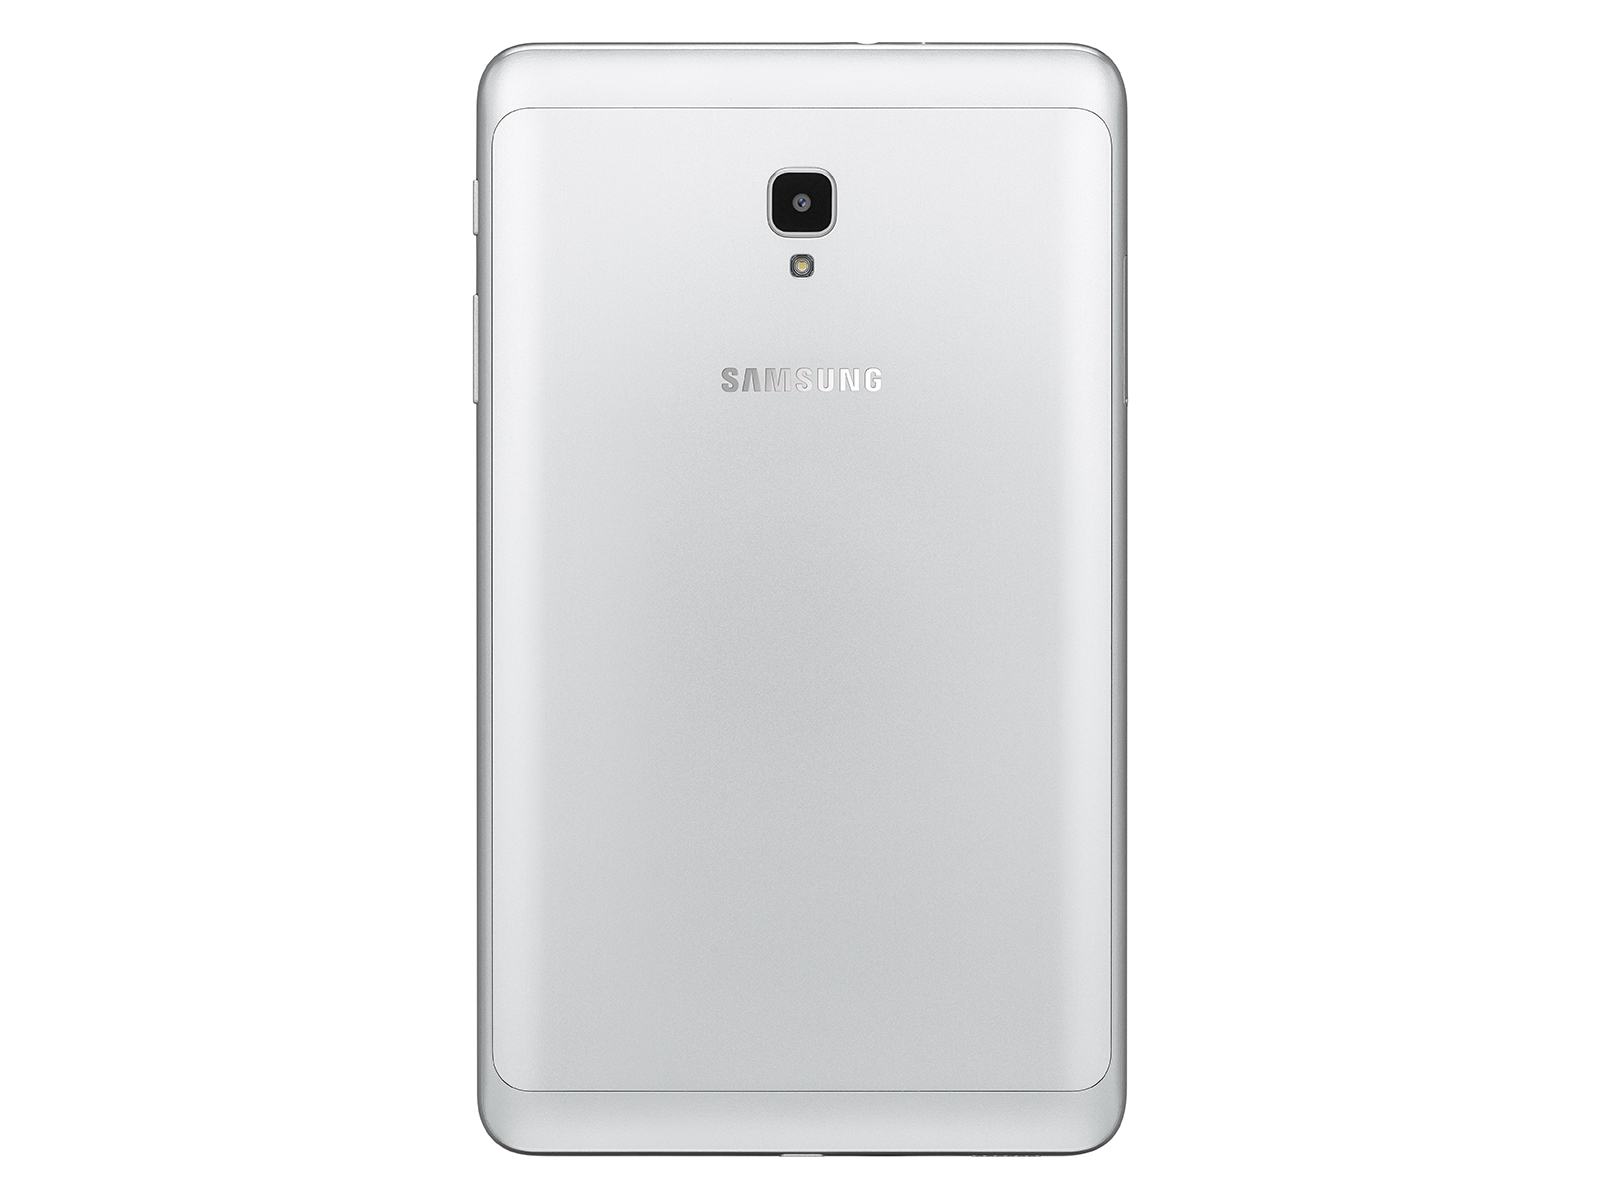 Galaxy Tab A 8.0 (NEW) 32GB, Silver Tablets - SM-T380NZSEXAR